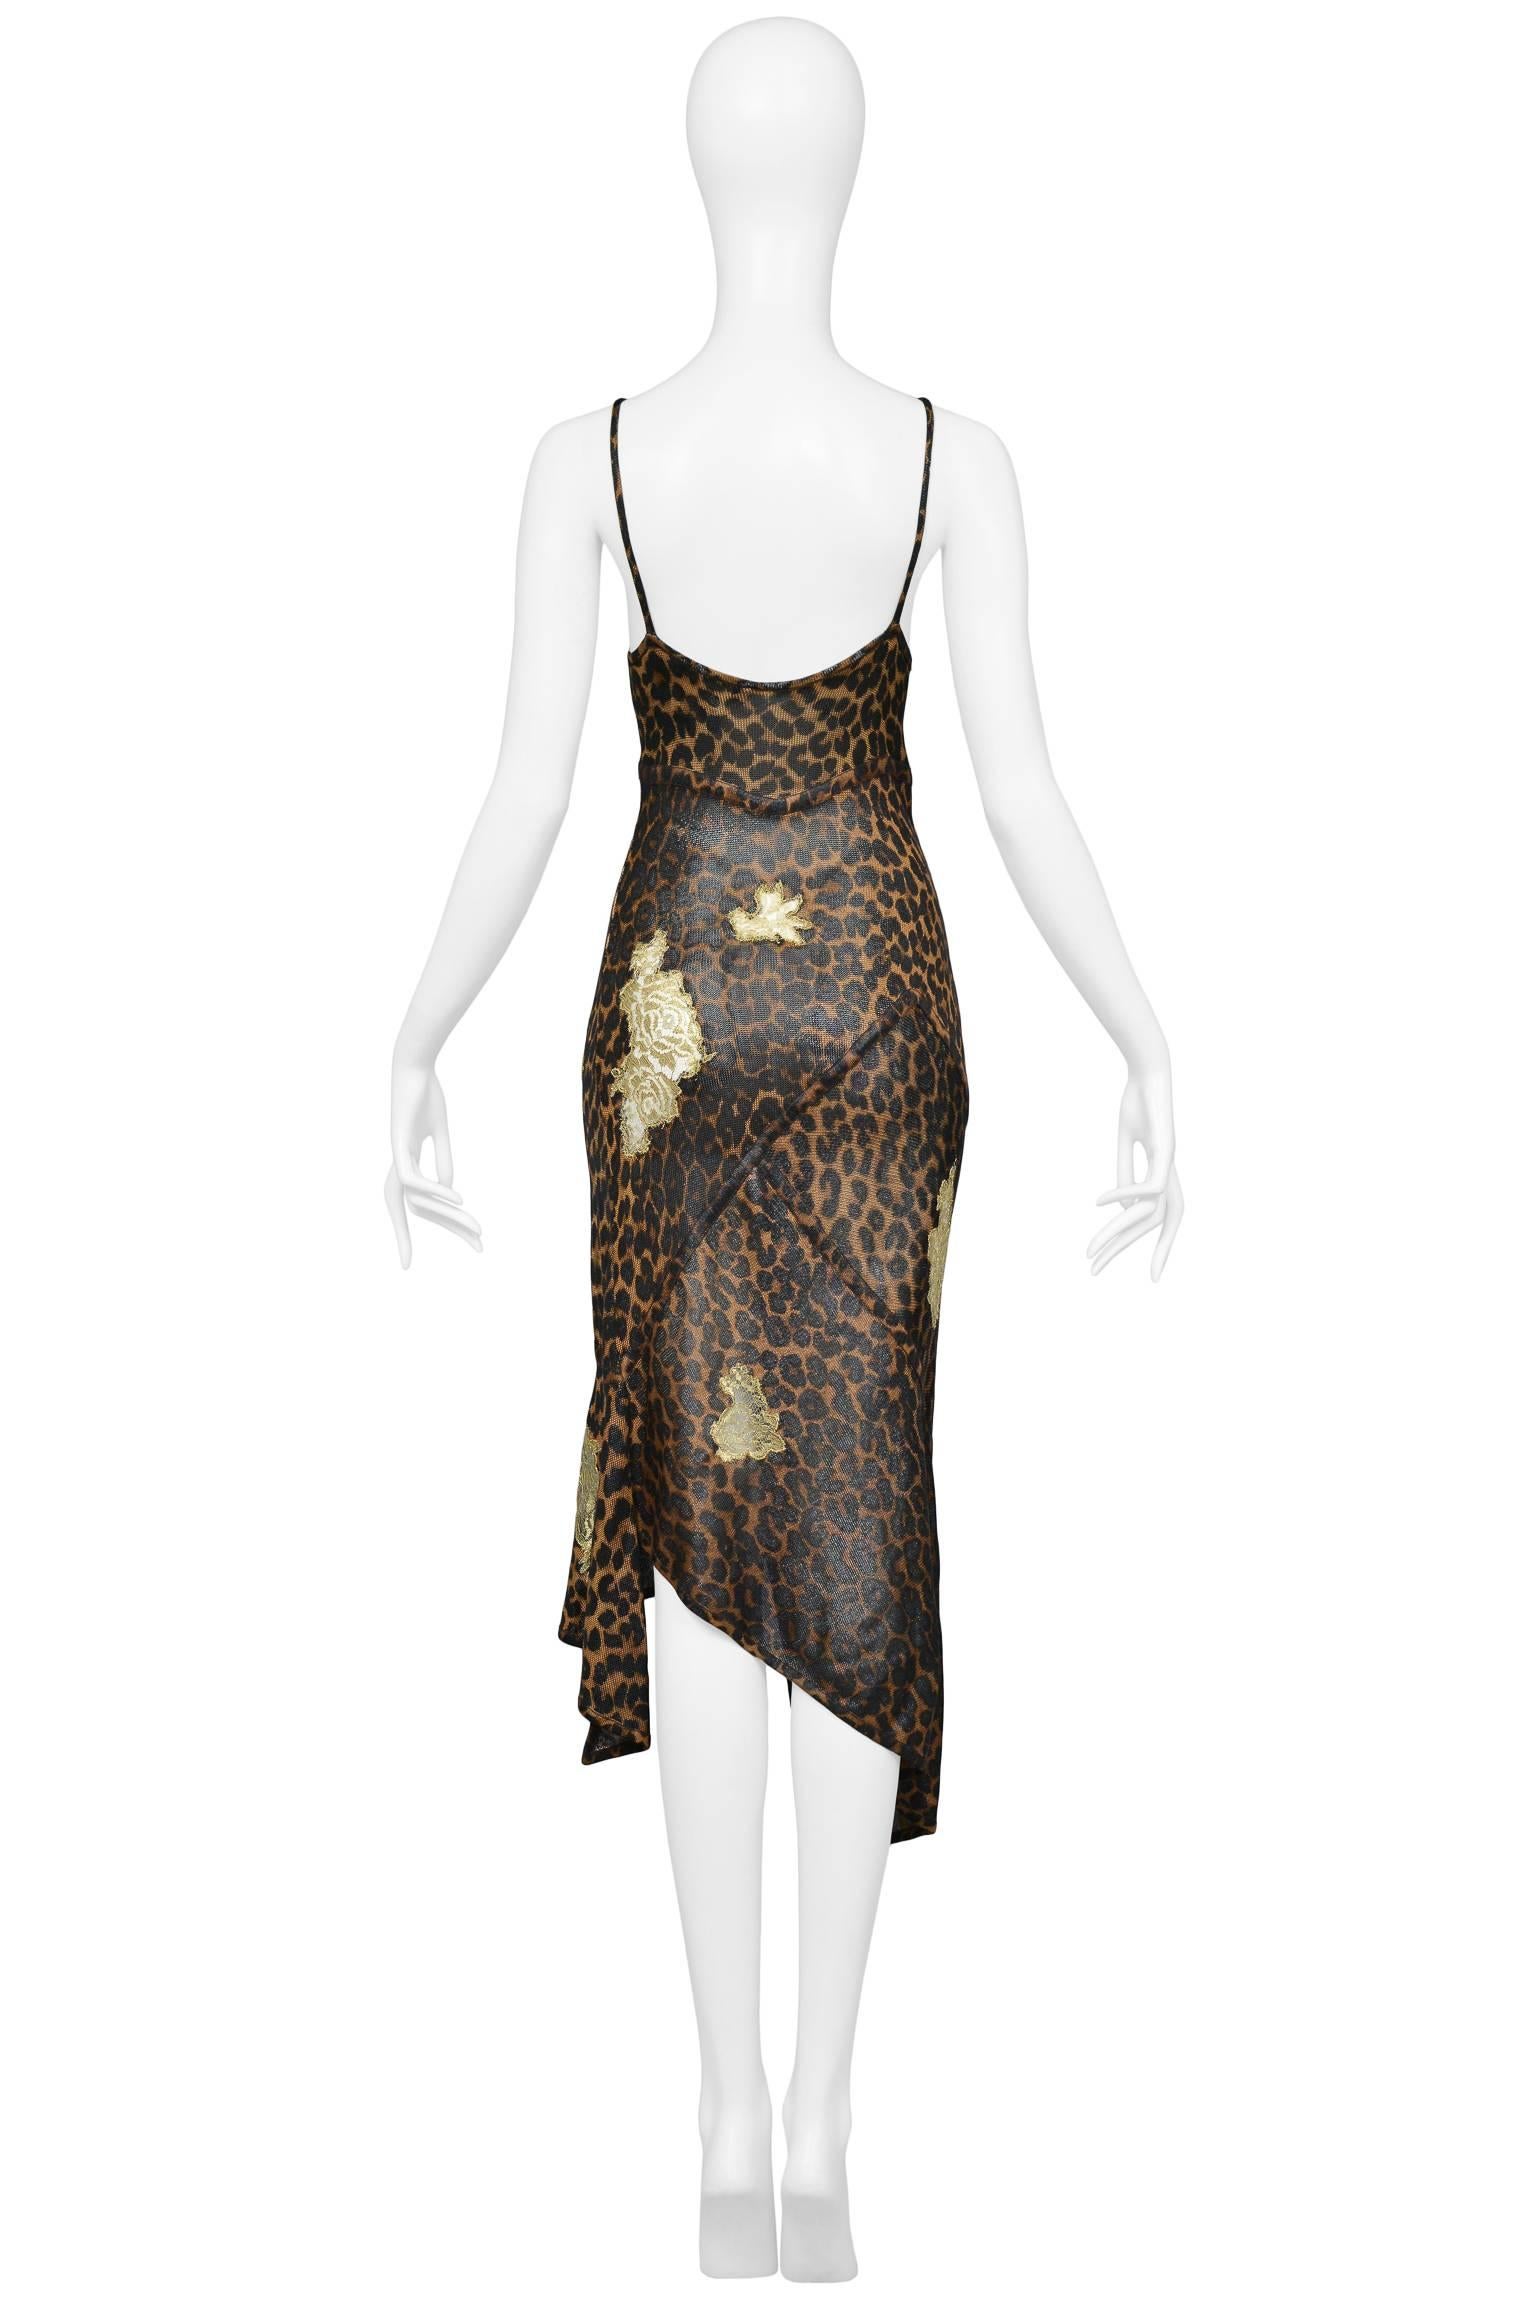 Women's Dior by Galliano Leopard Metallic Knit Dress w Lace Applique & 